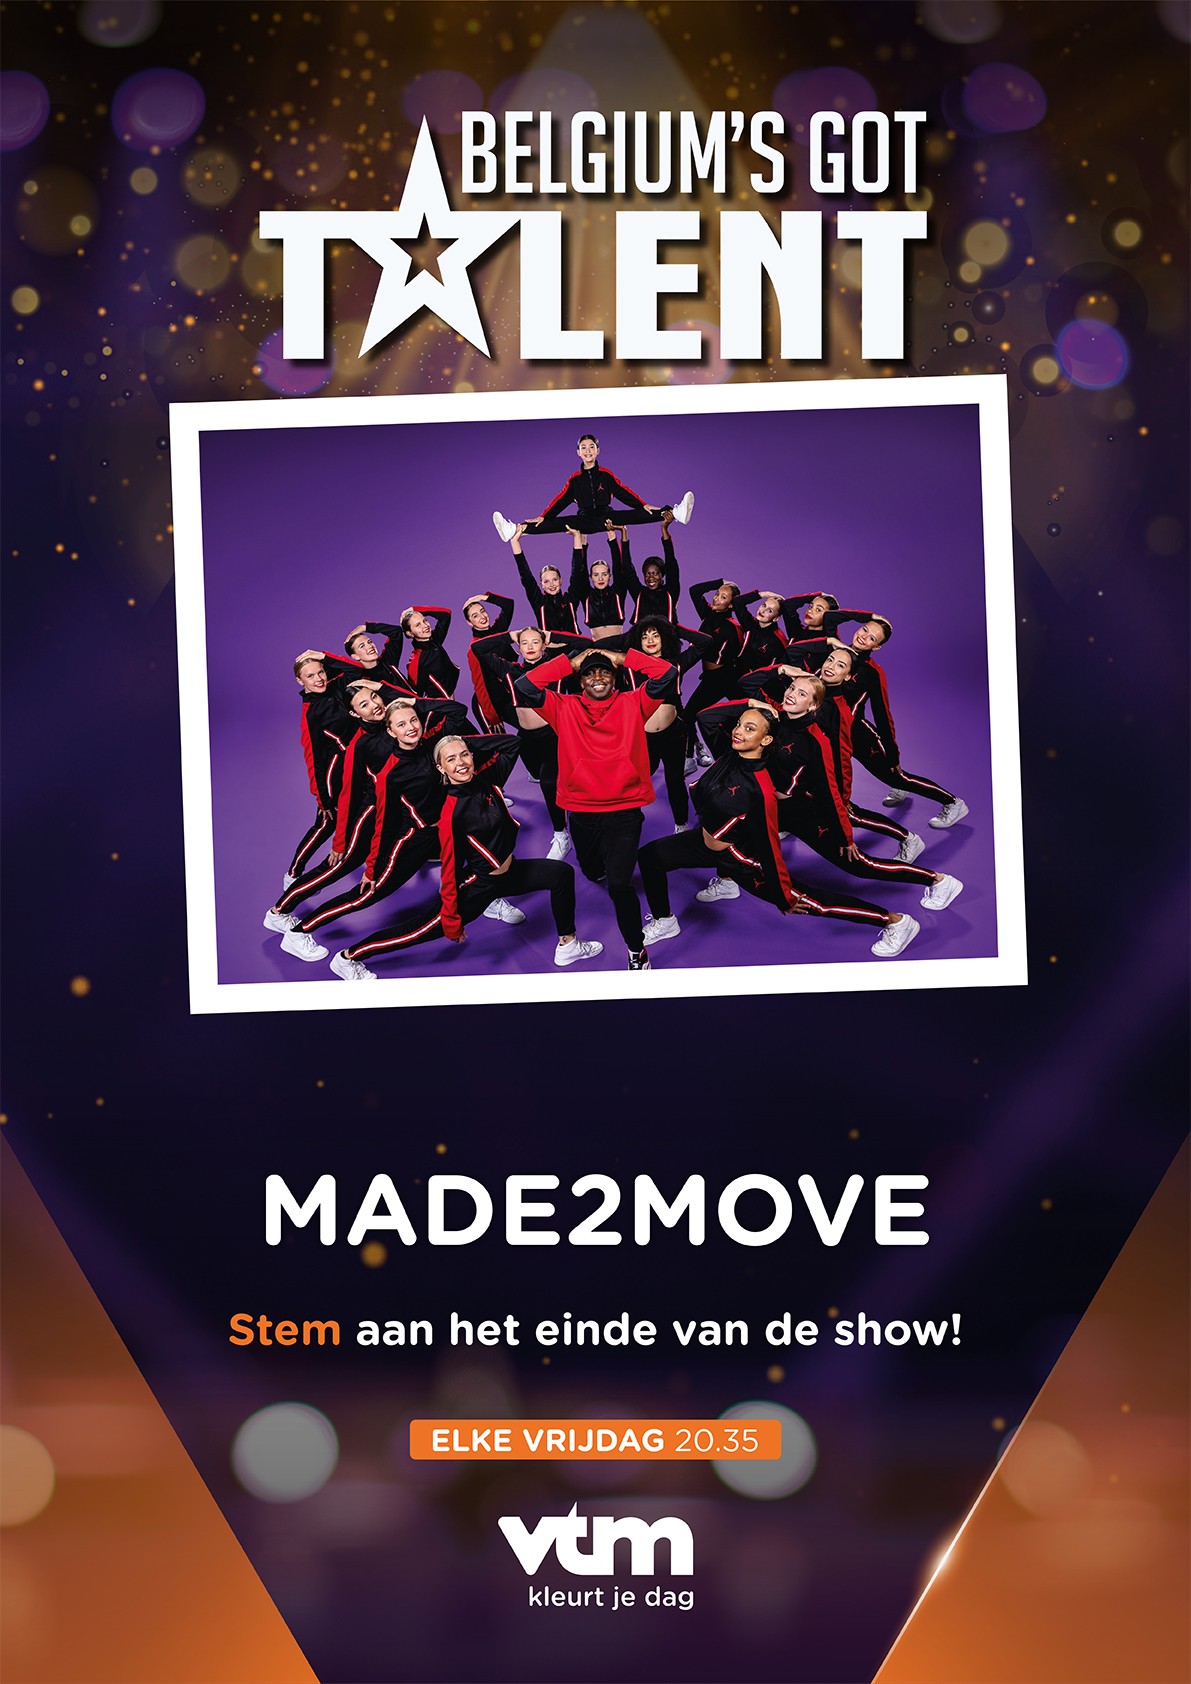 MADE2MOVE Collab Belgium's Got Talent poster